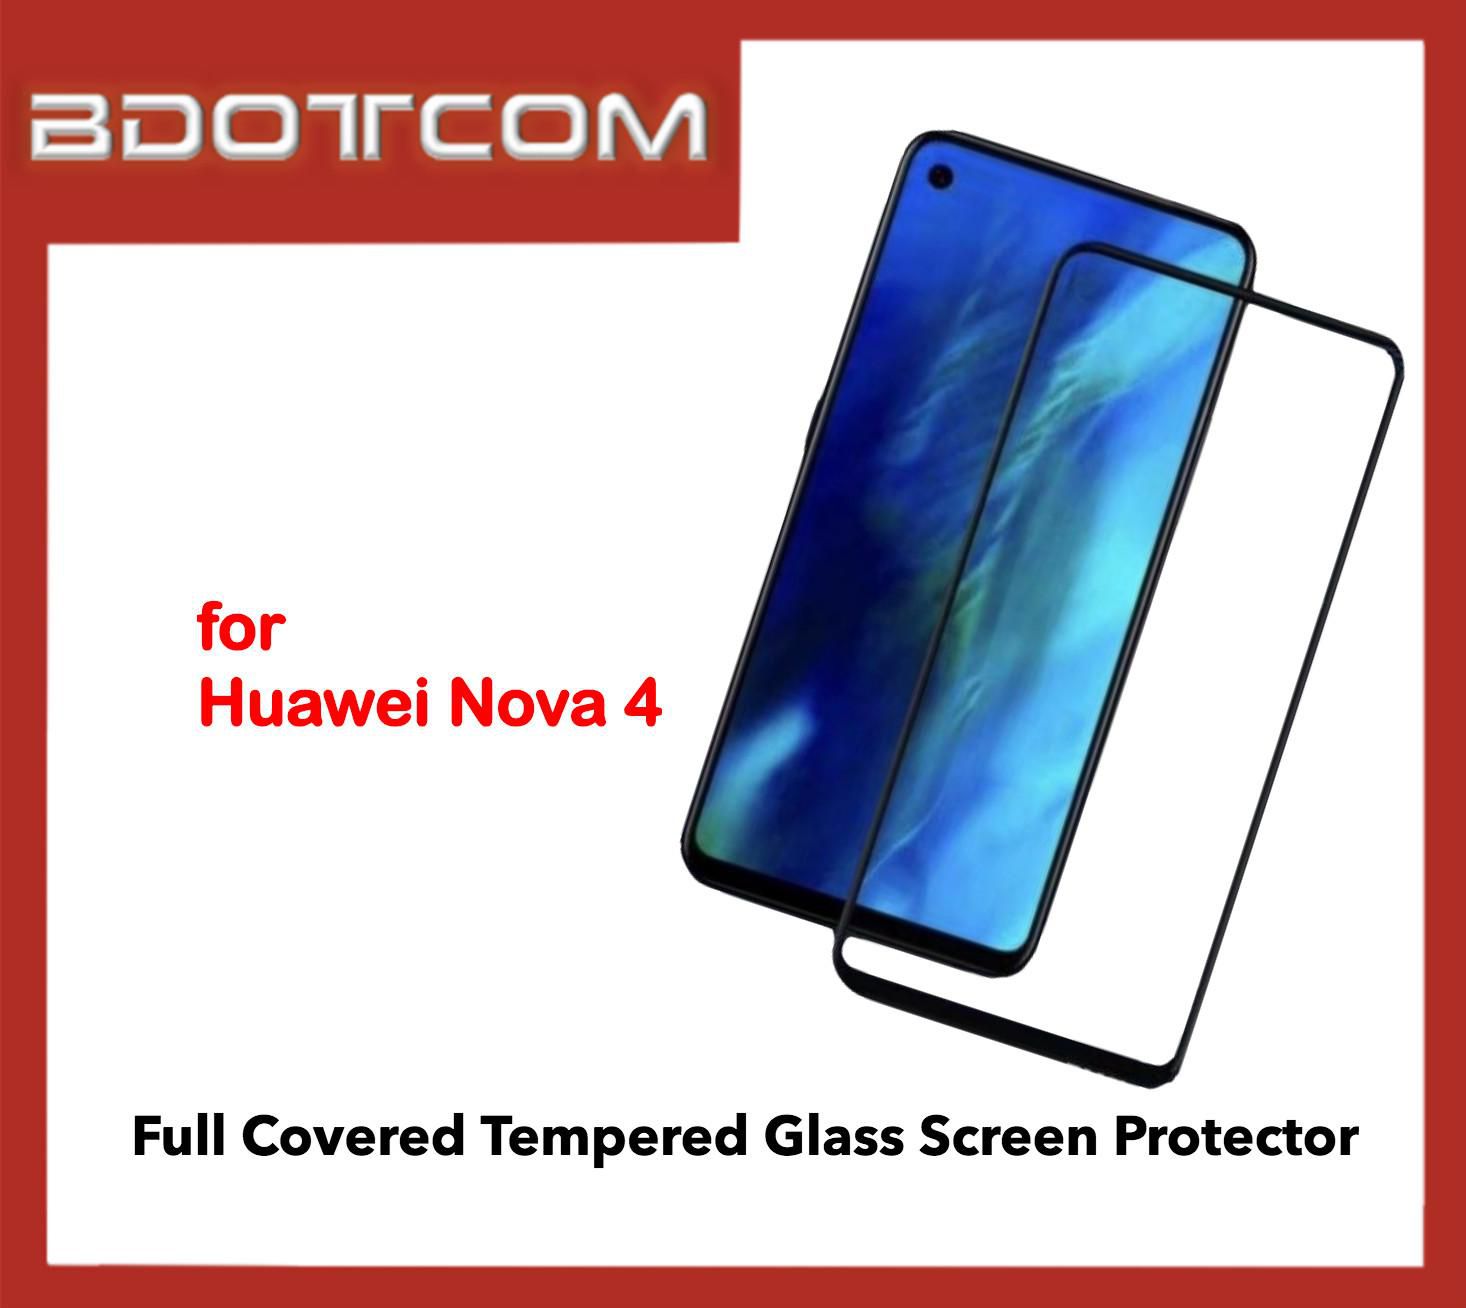 Bdotcom Full Covered Tempered Glass Screen Protector for Huawei Nova 4 (Black)